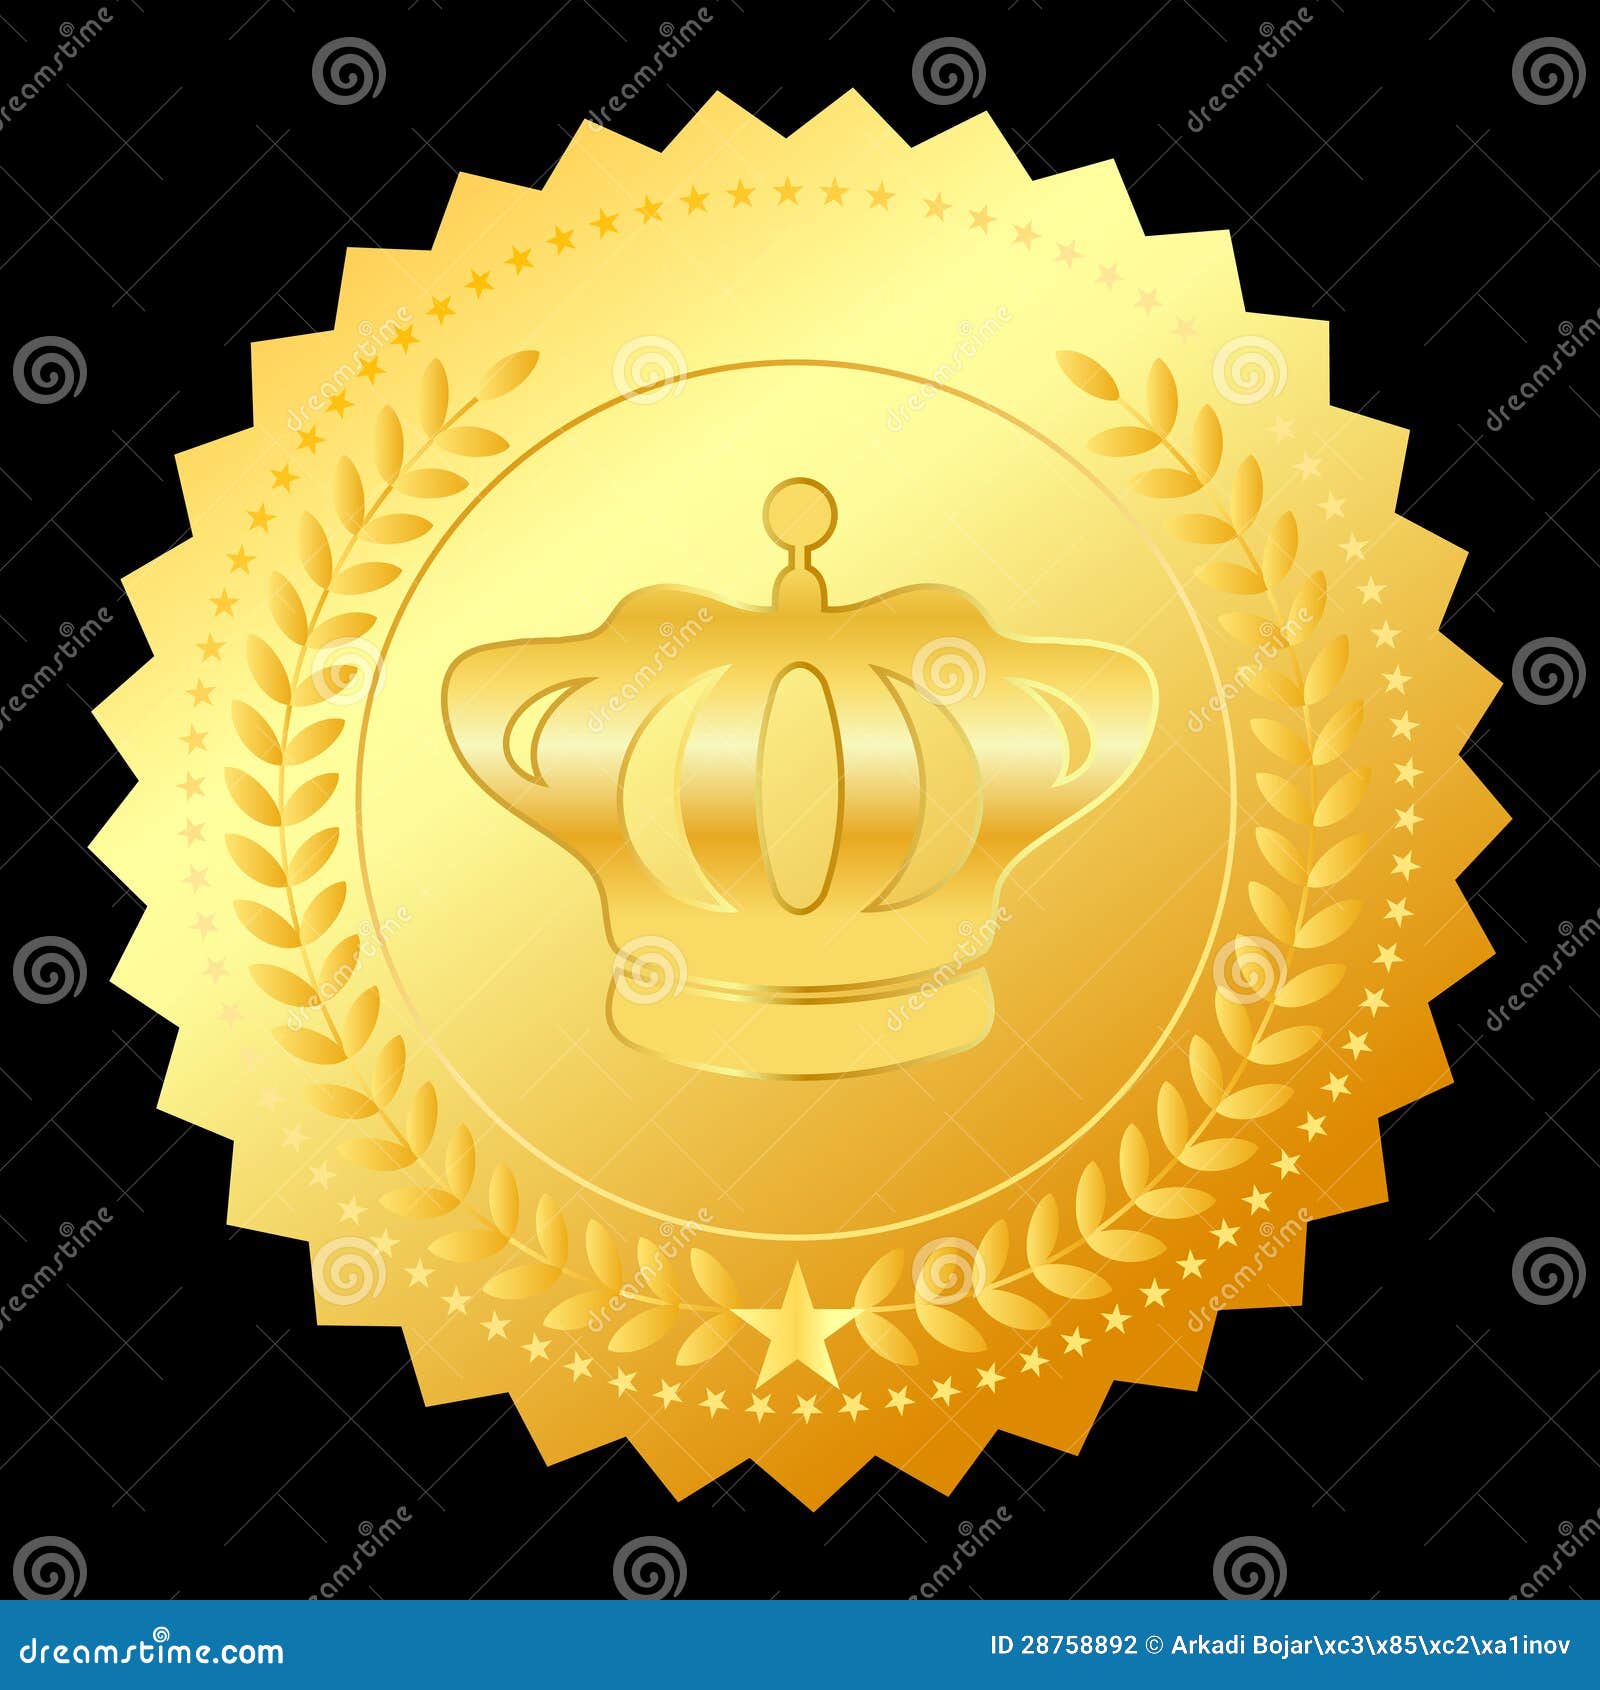 Premium Icon Stock Vector Illustration Of Element Award 28758892